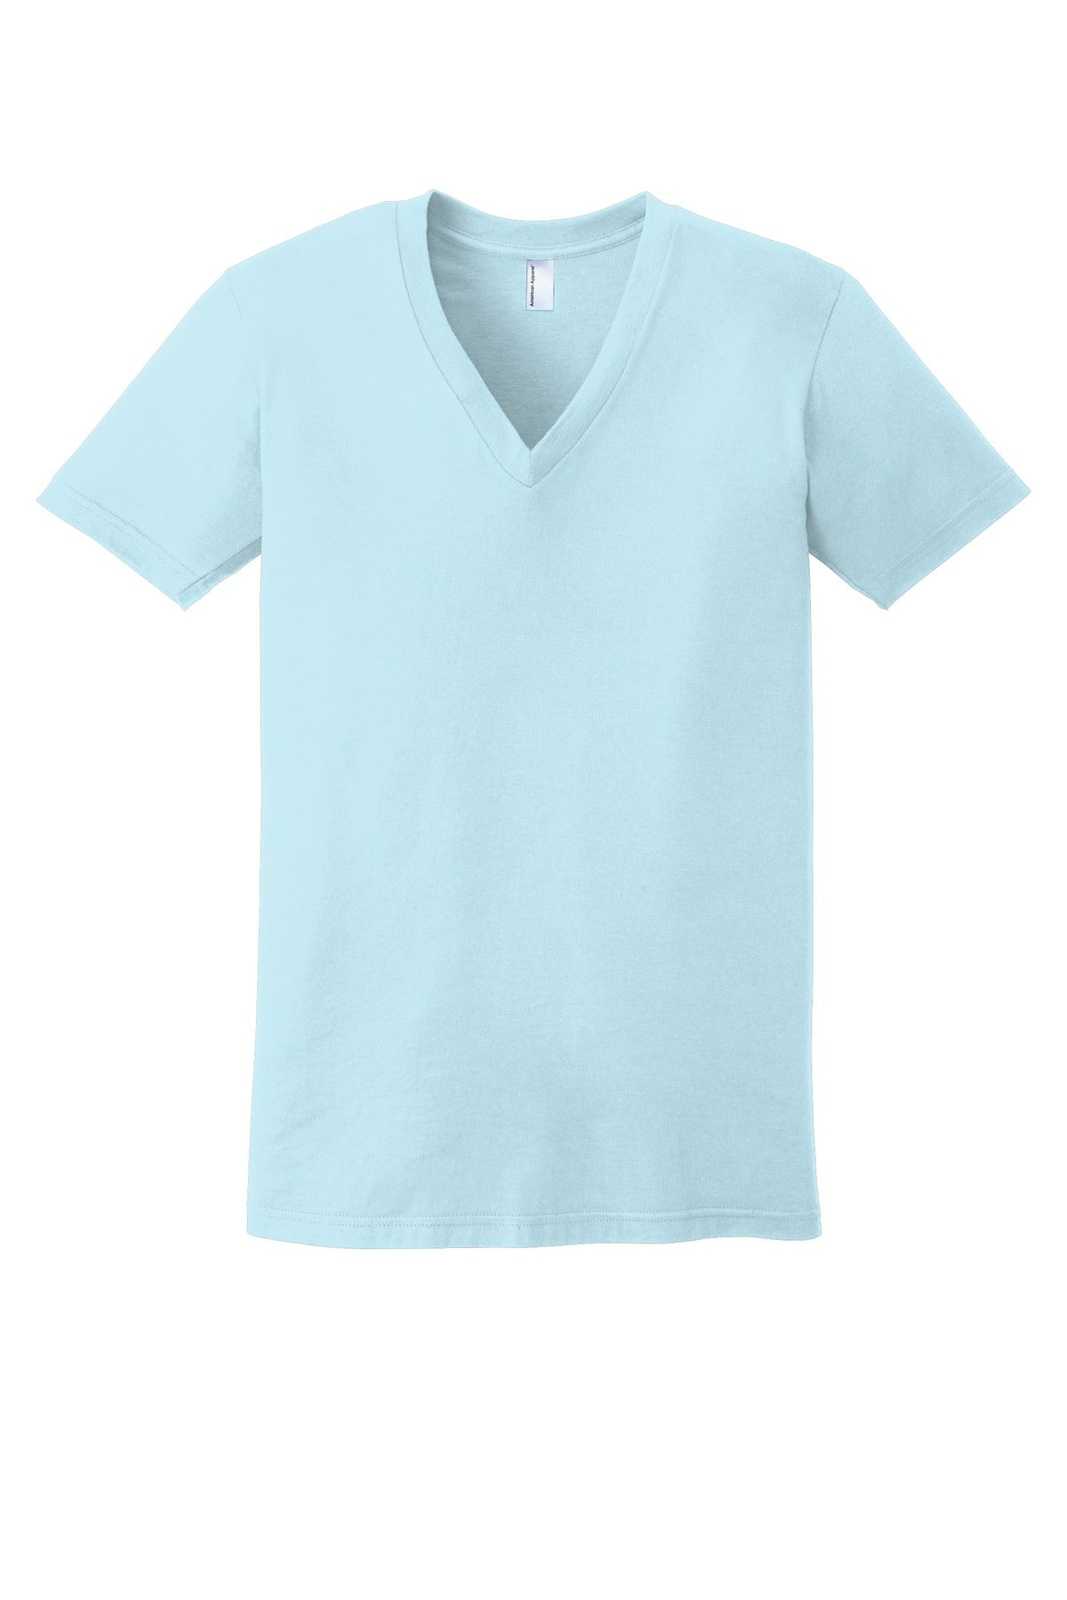 American Apparel 2456W Fine Jersey V-Neck T-Shirt - Light Blue - HIT a Double